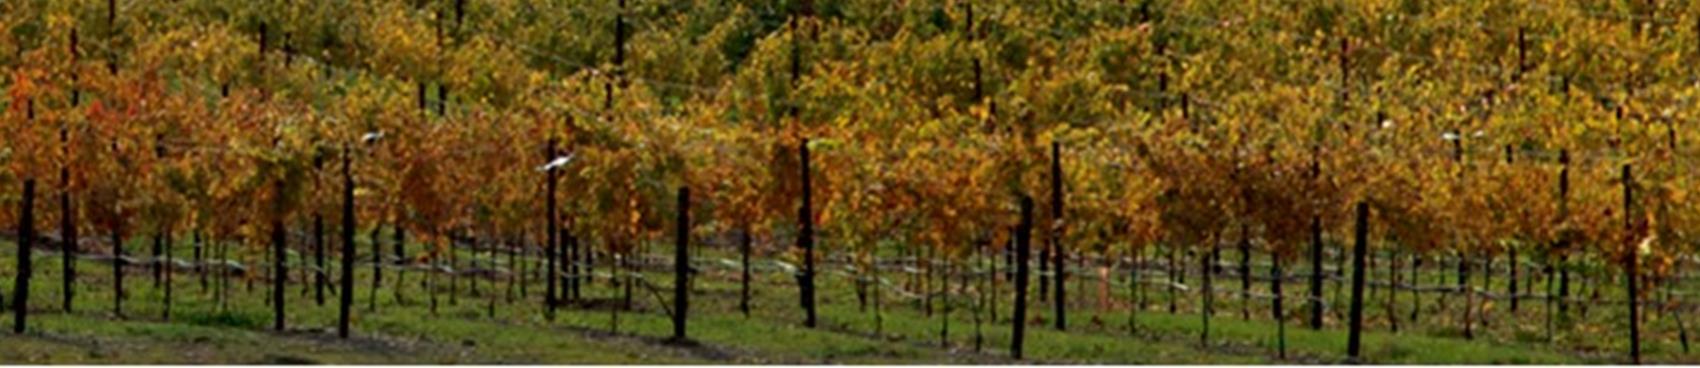 Garre' Vineyard & Winery